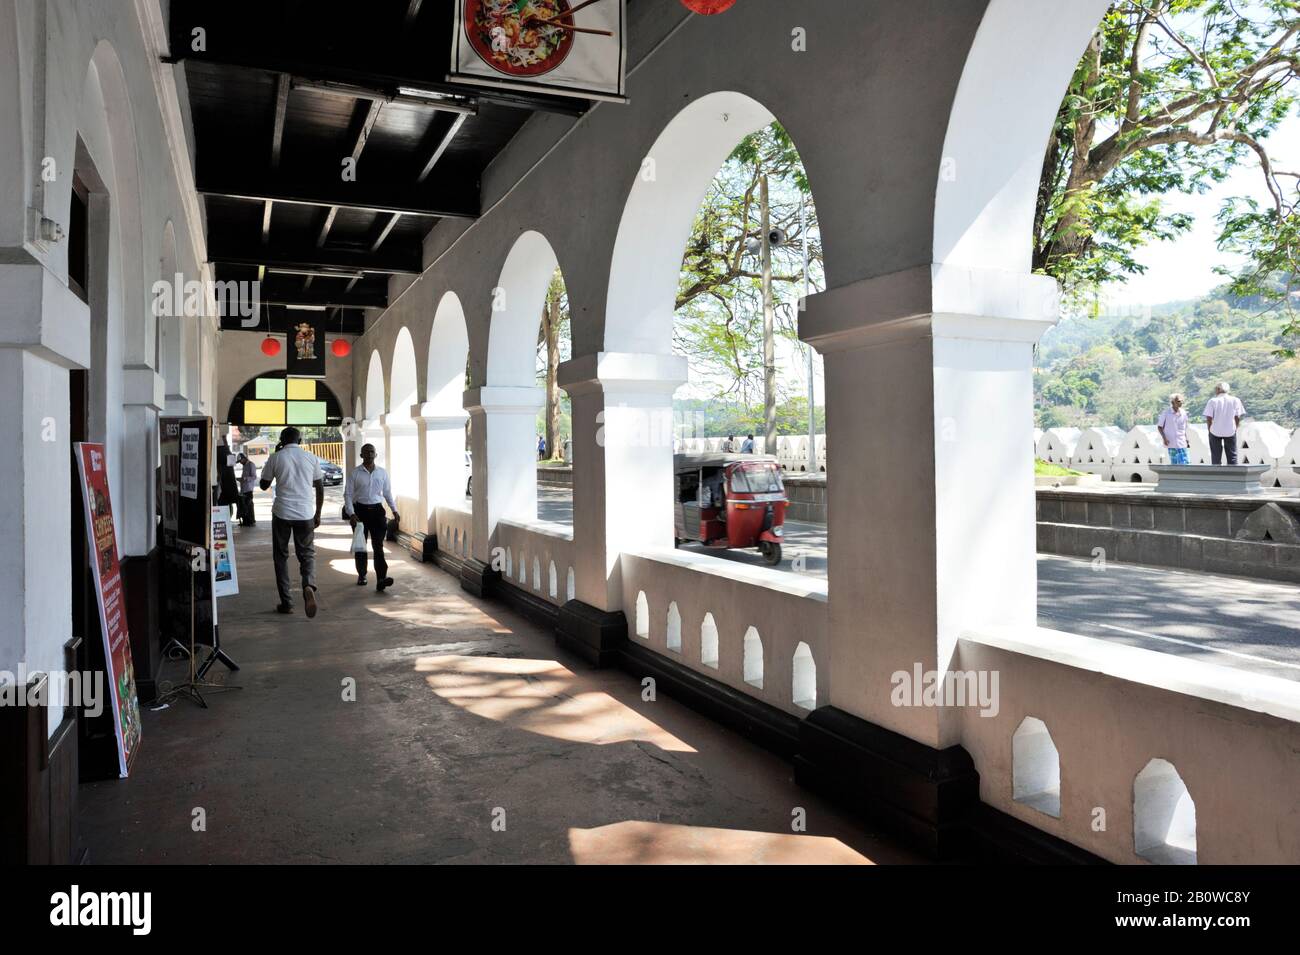 Sri Lanka, Kandy, colonial architecture Stock Photo